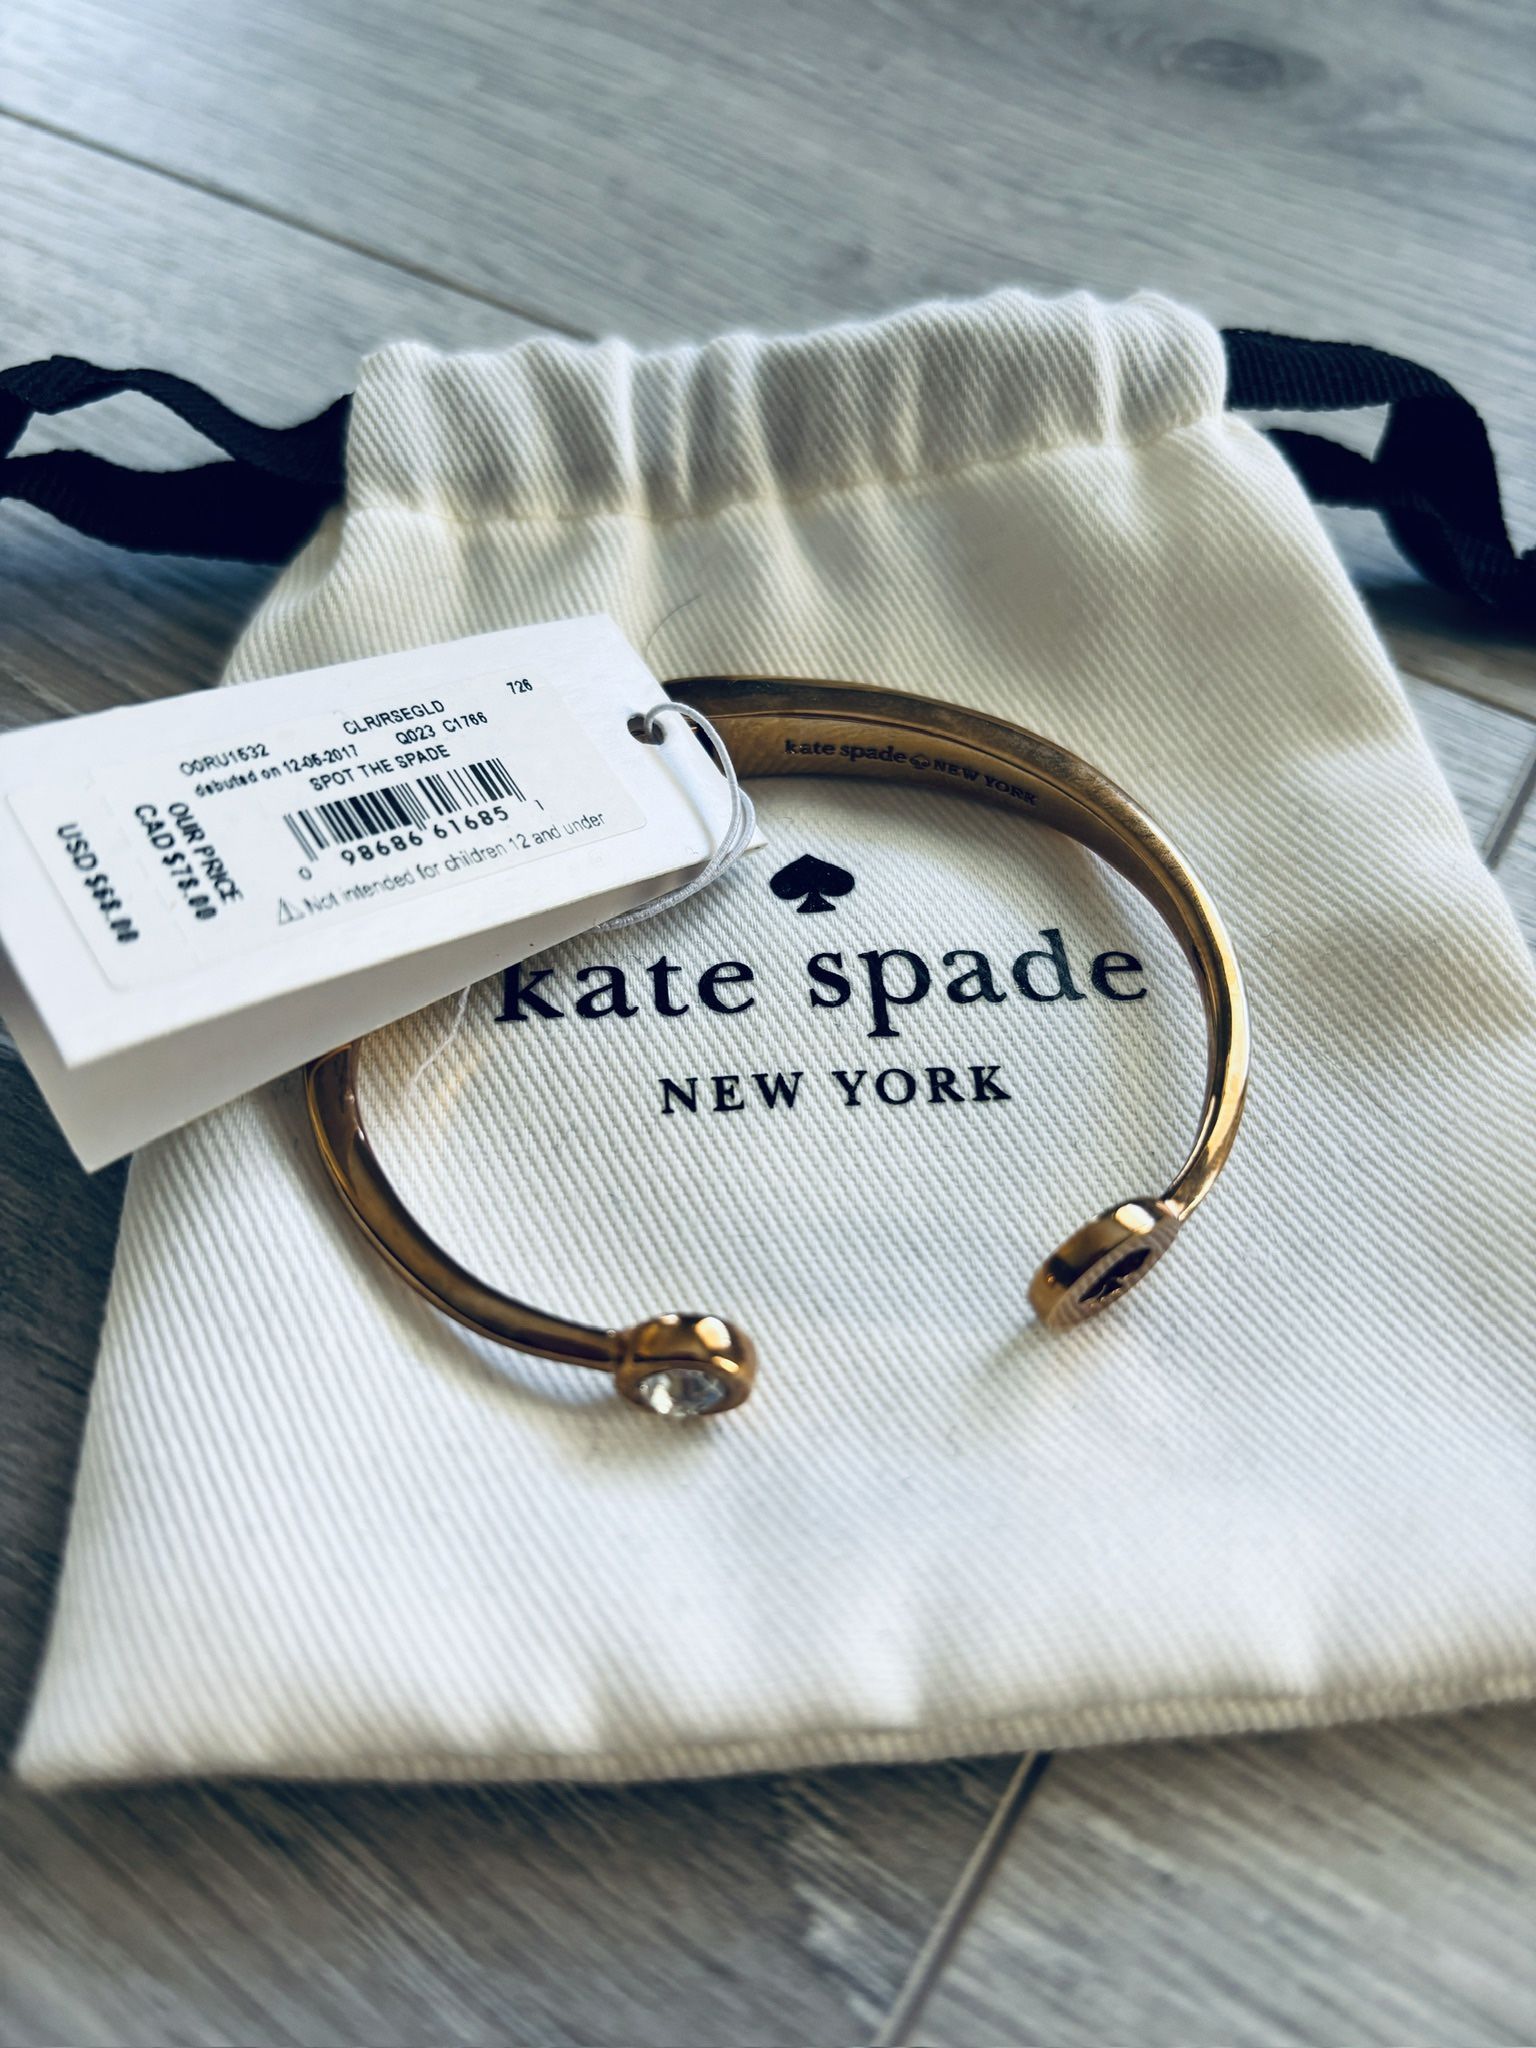 Kate Spade “spot the spade” bracelet